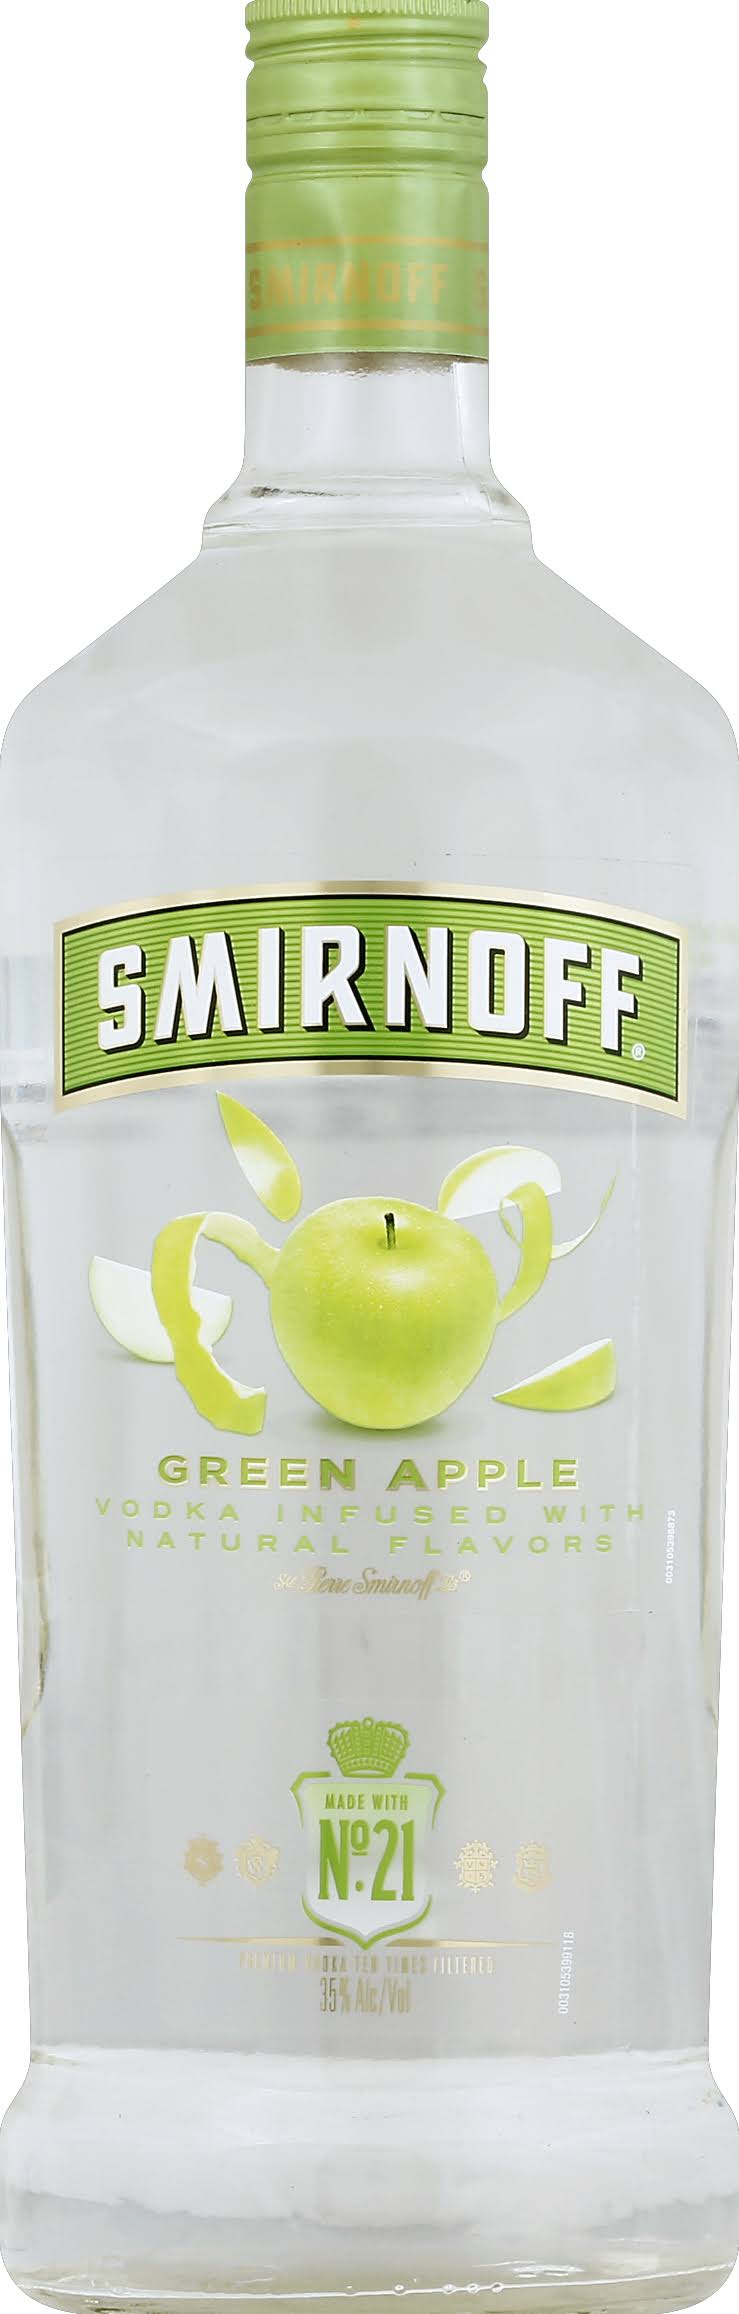 Smirnoff Vodka, Green Apple - 1.75 lt